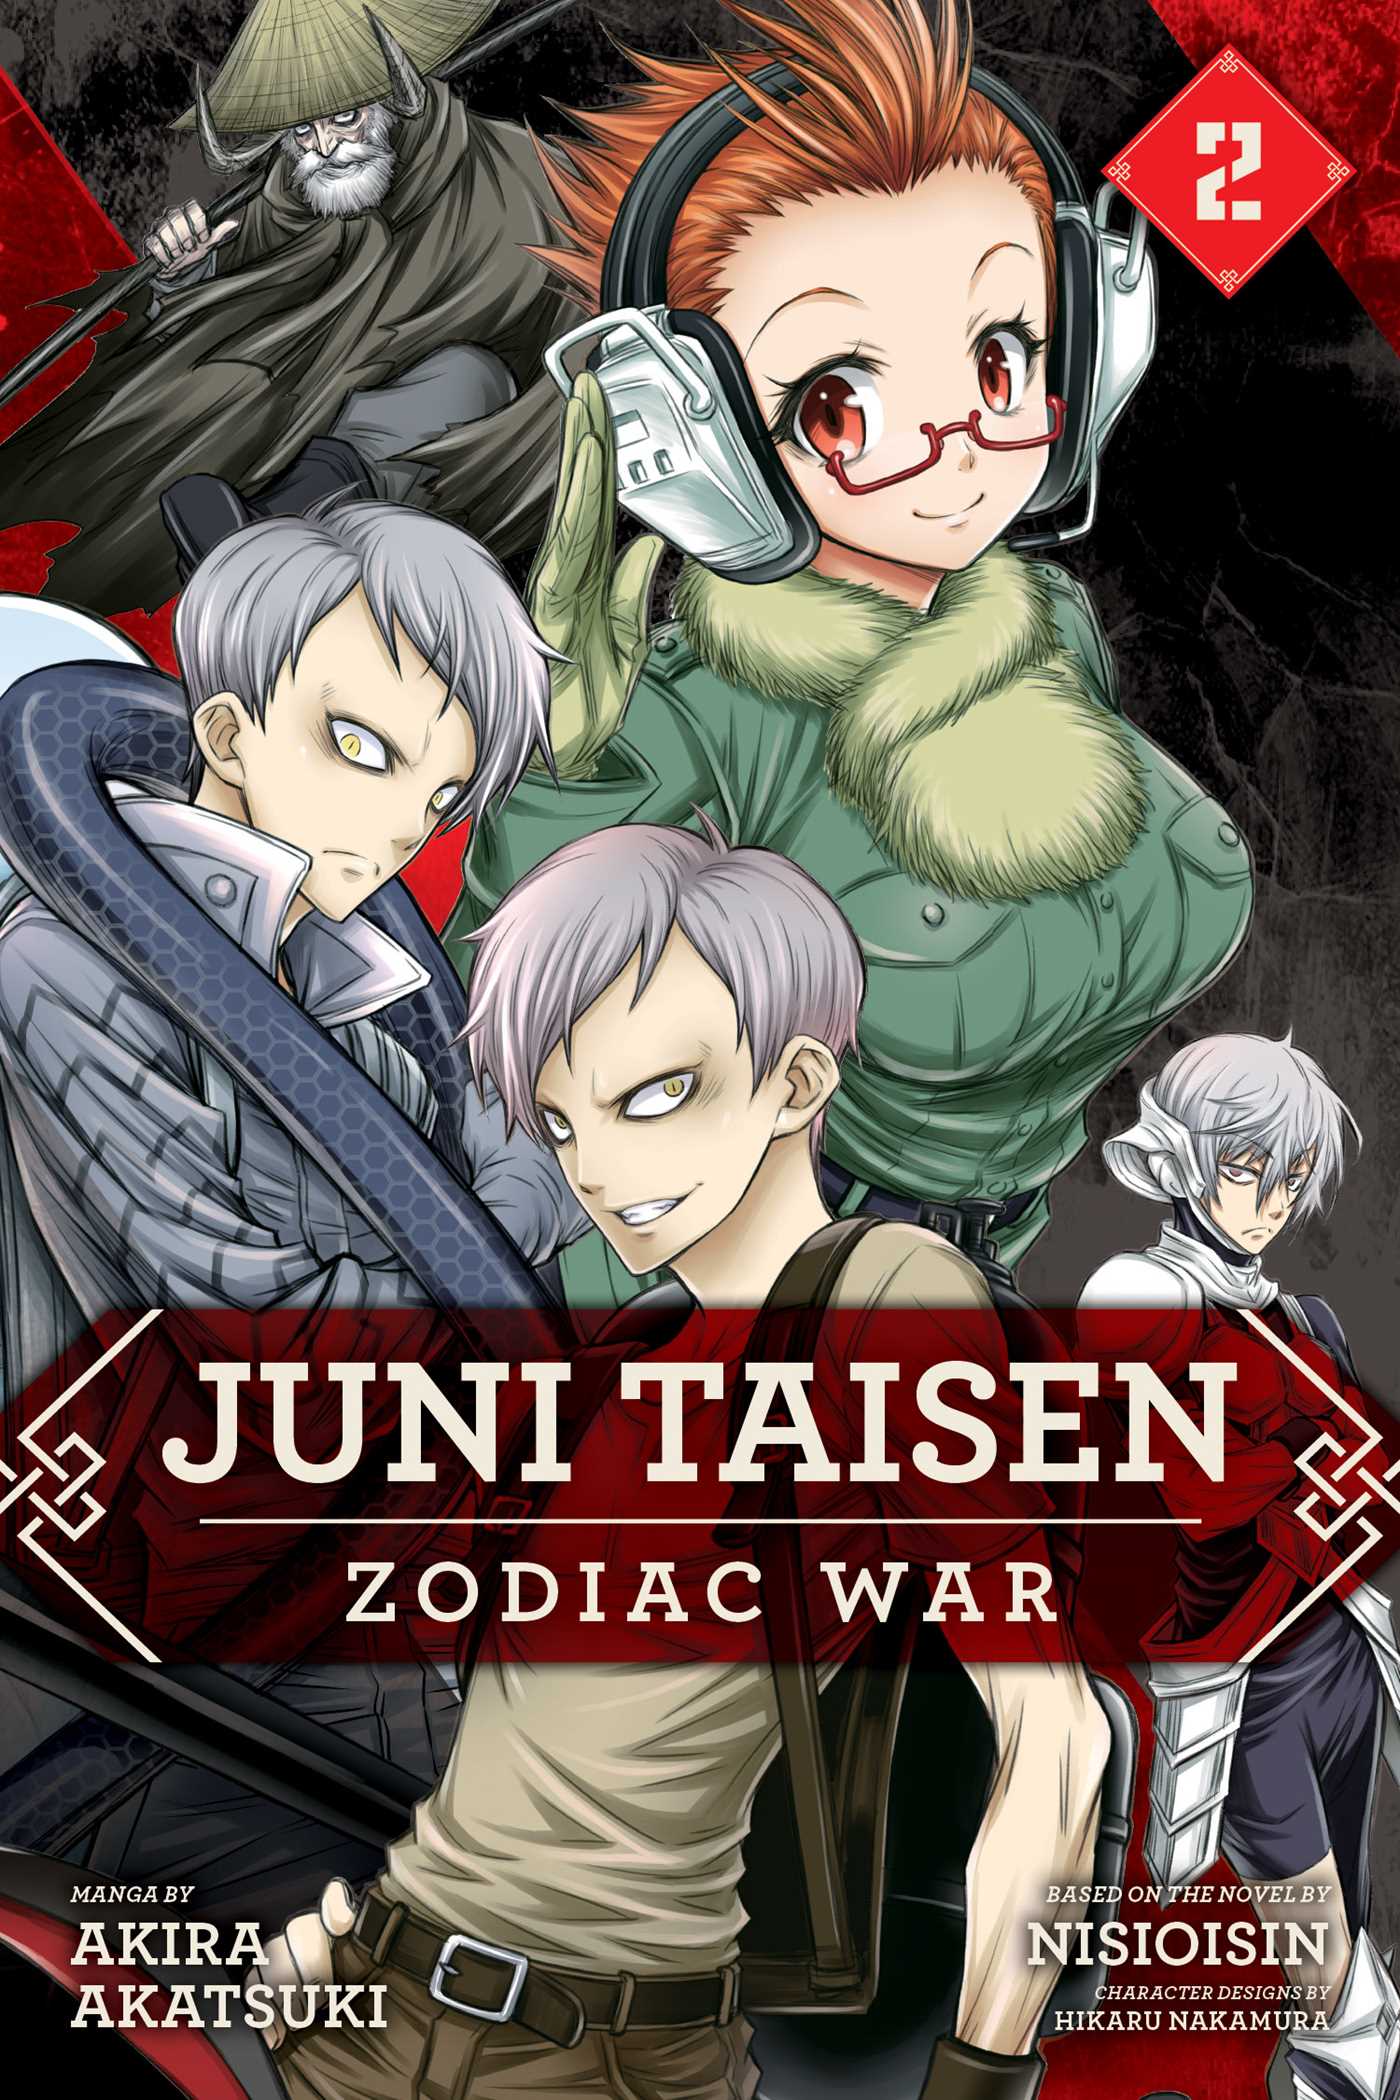 Juni Taisen: Zodiac War (manga), Vol. 2 - Manga Warehouse